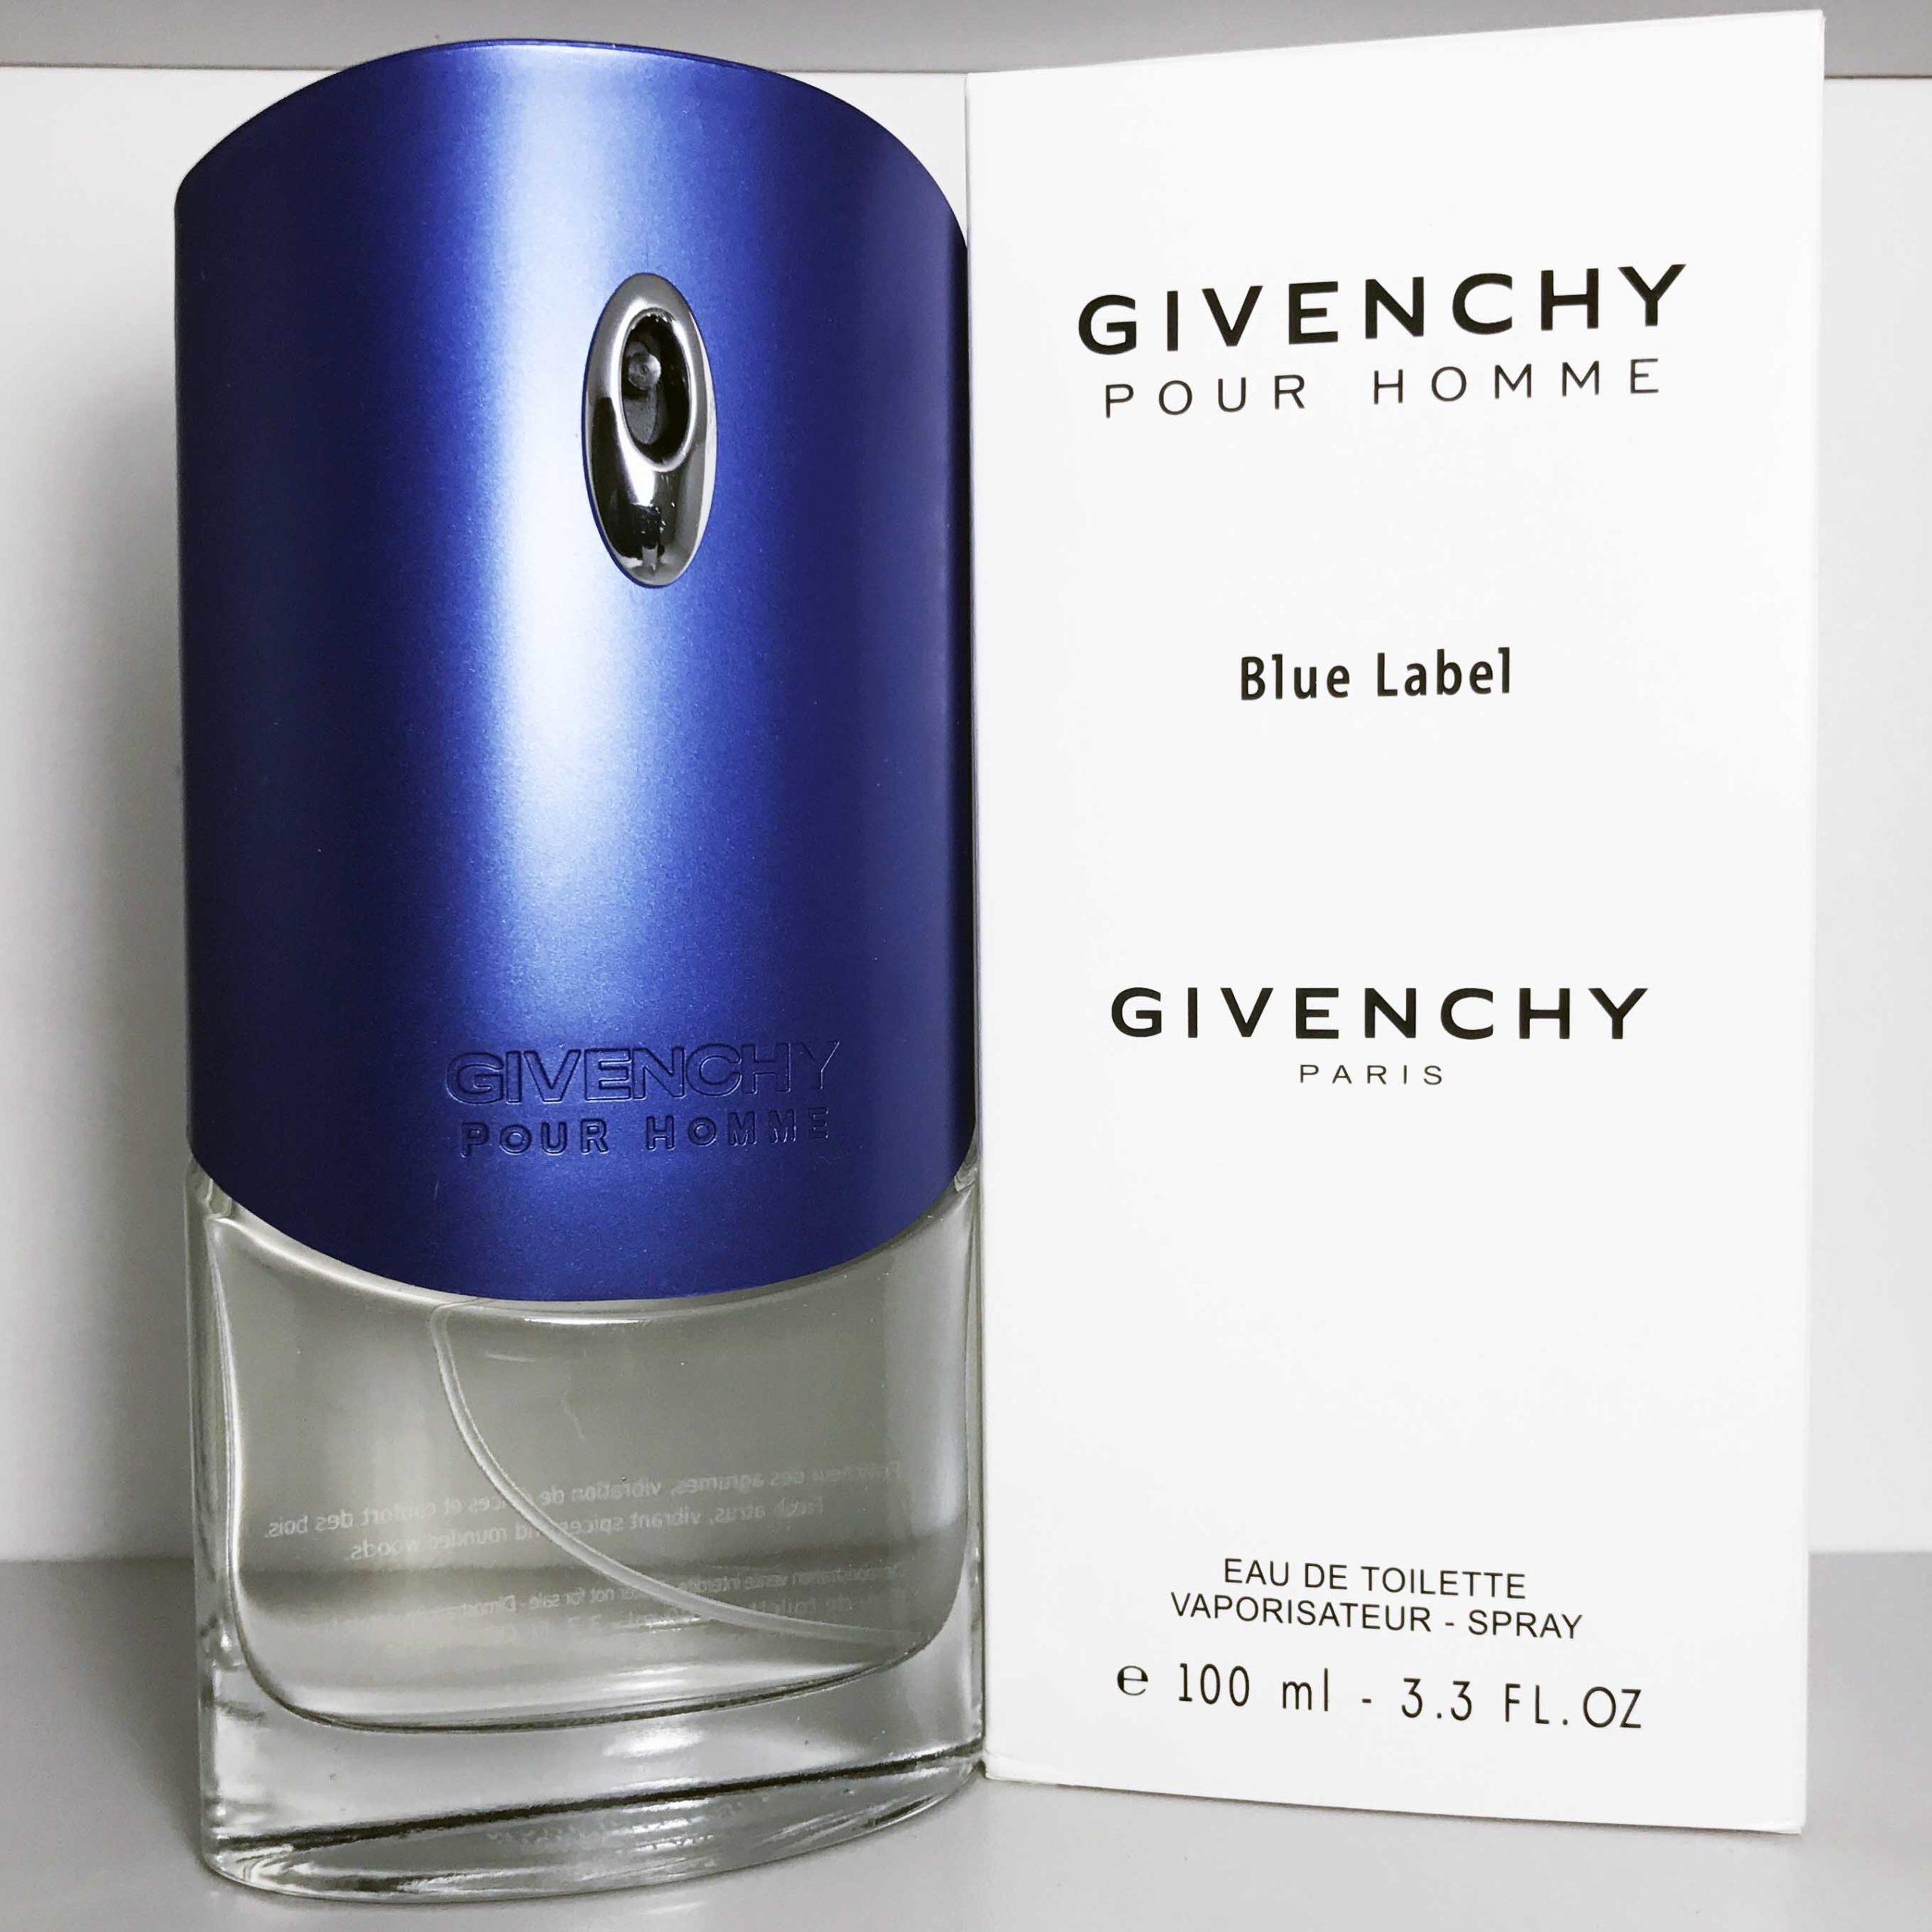 Живанши мужские летуаль. Givenchy pour homme тестер 100. Духи живанши Блю. Givenchy pour homme Blue Label. Givenchy pour homme Blue Label туалетная вода мужская 100 мл.